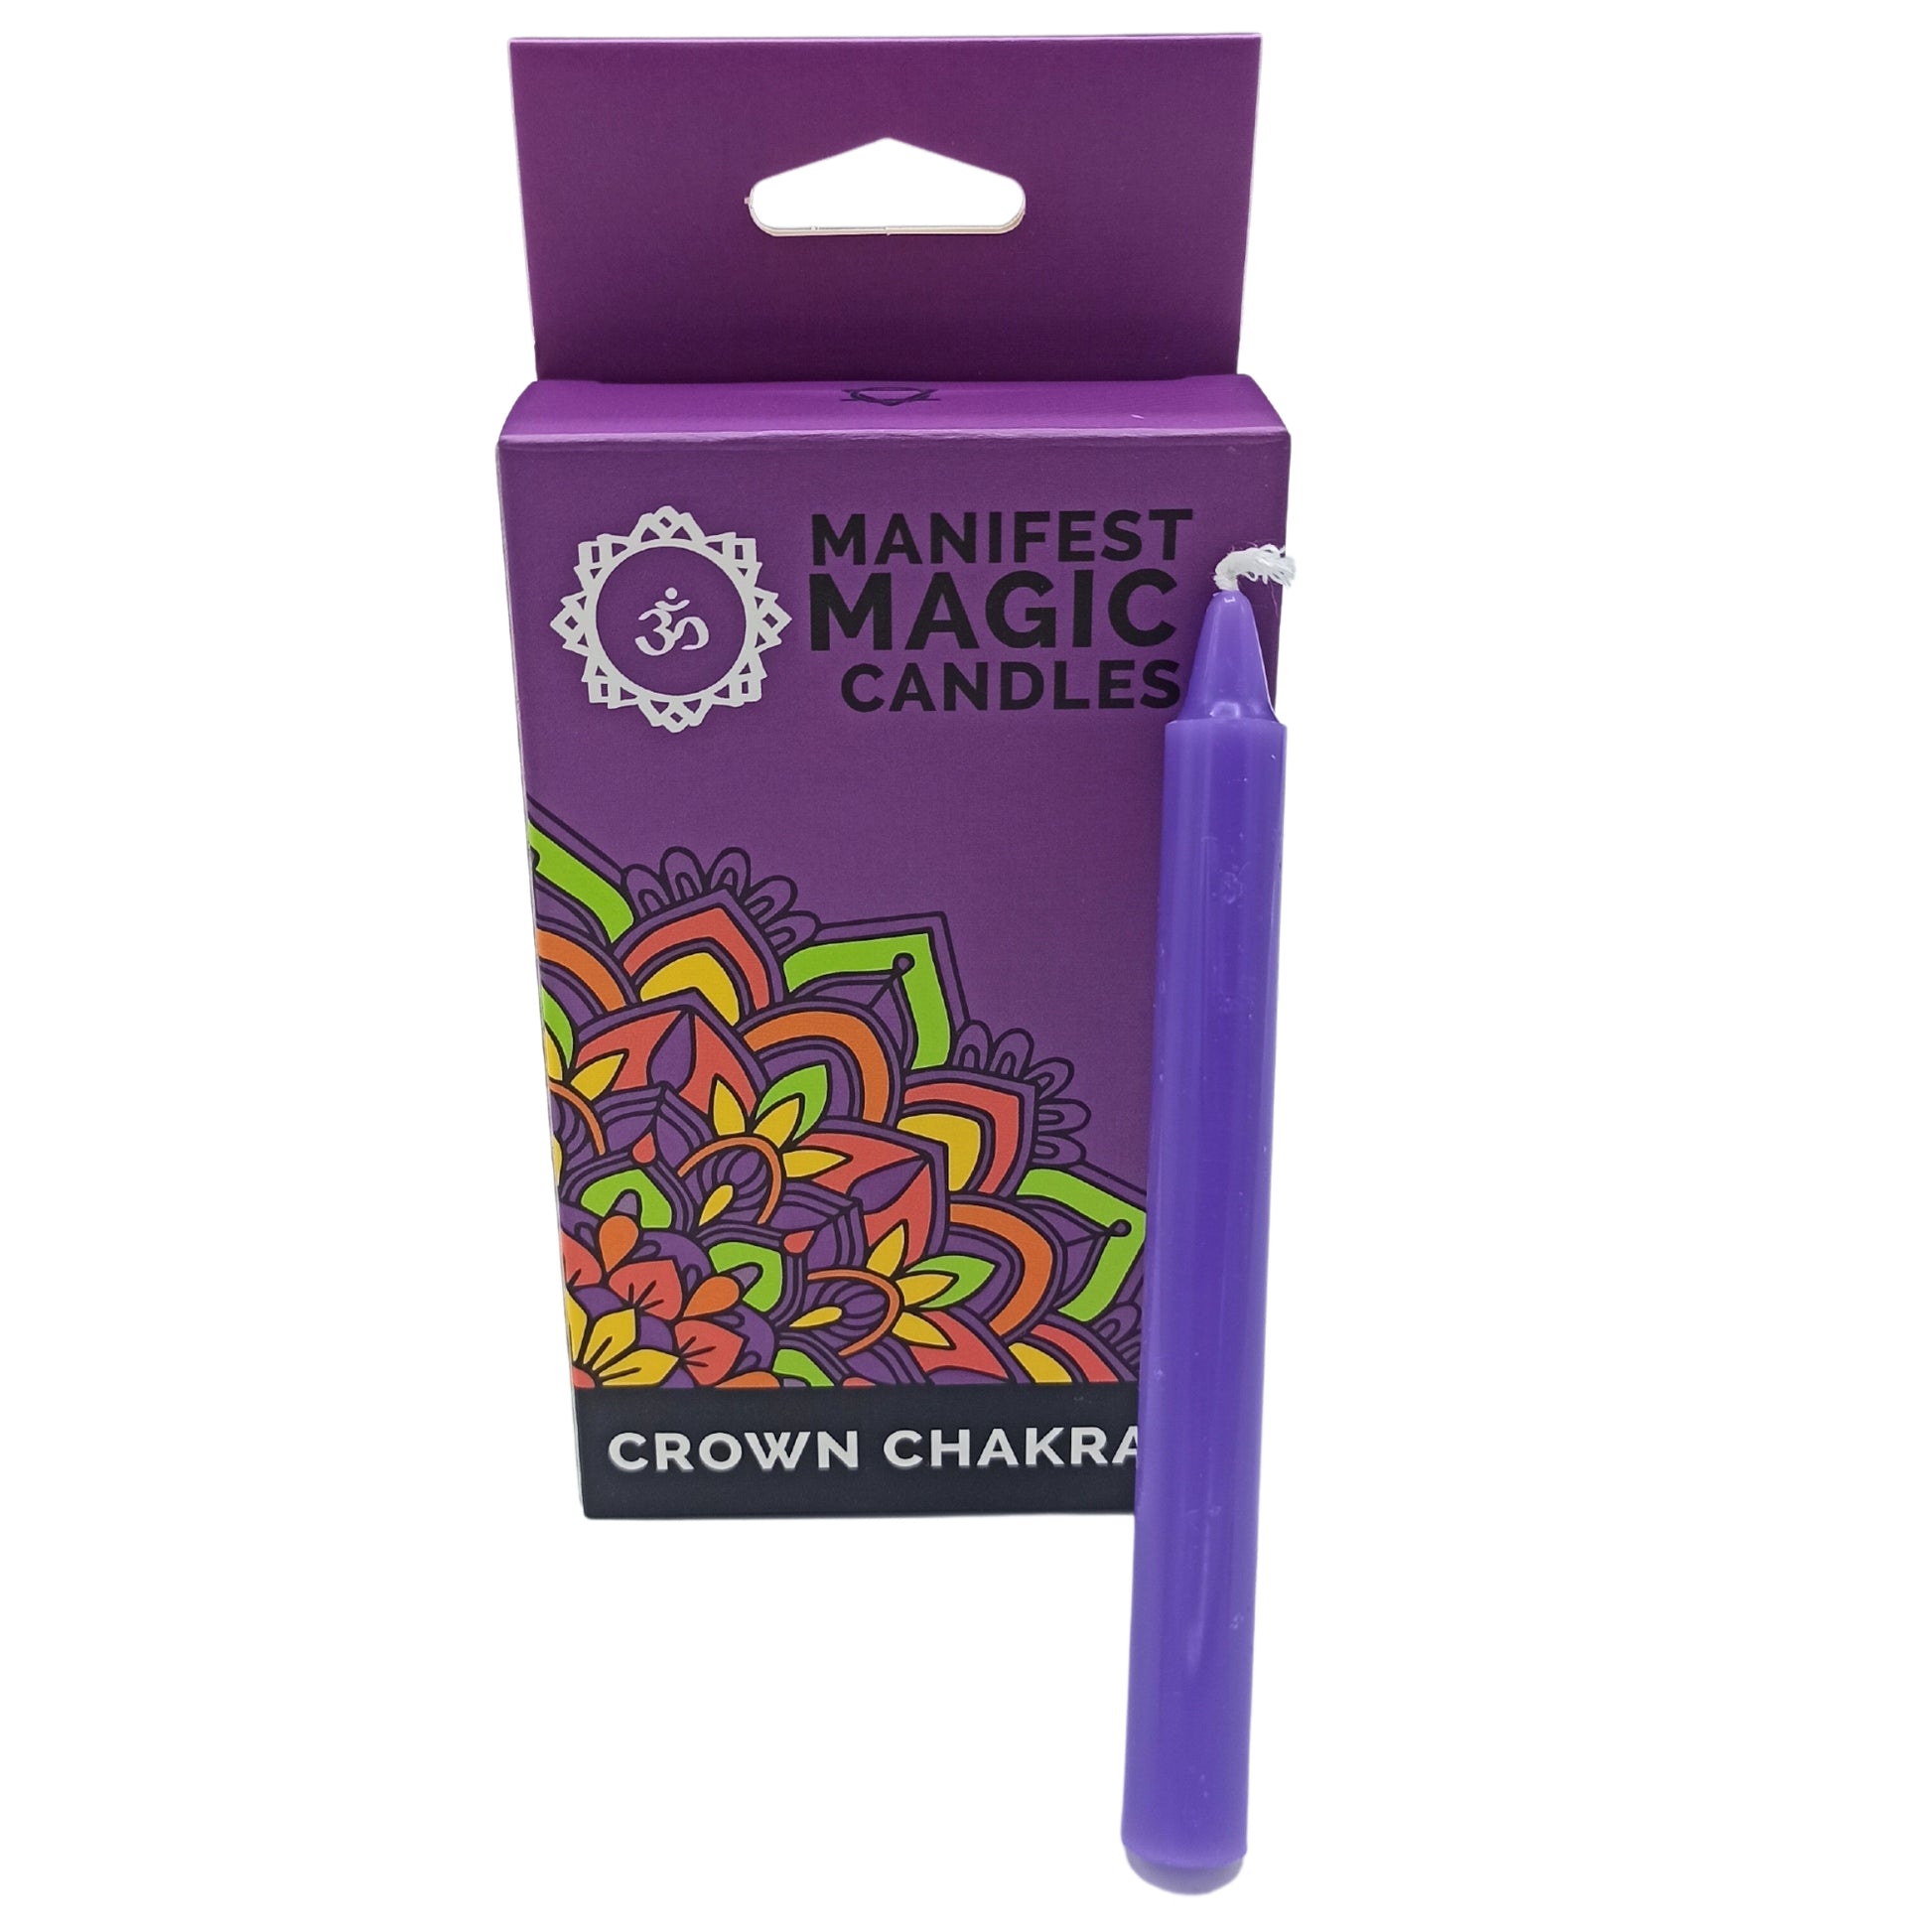 Manifest Magic Candles (pack of 12) - Violet - Crown Chakra - Kaftans direct